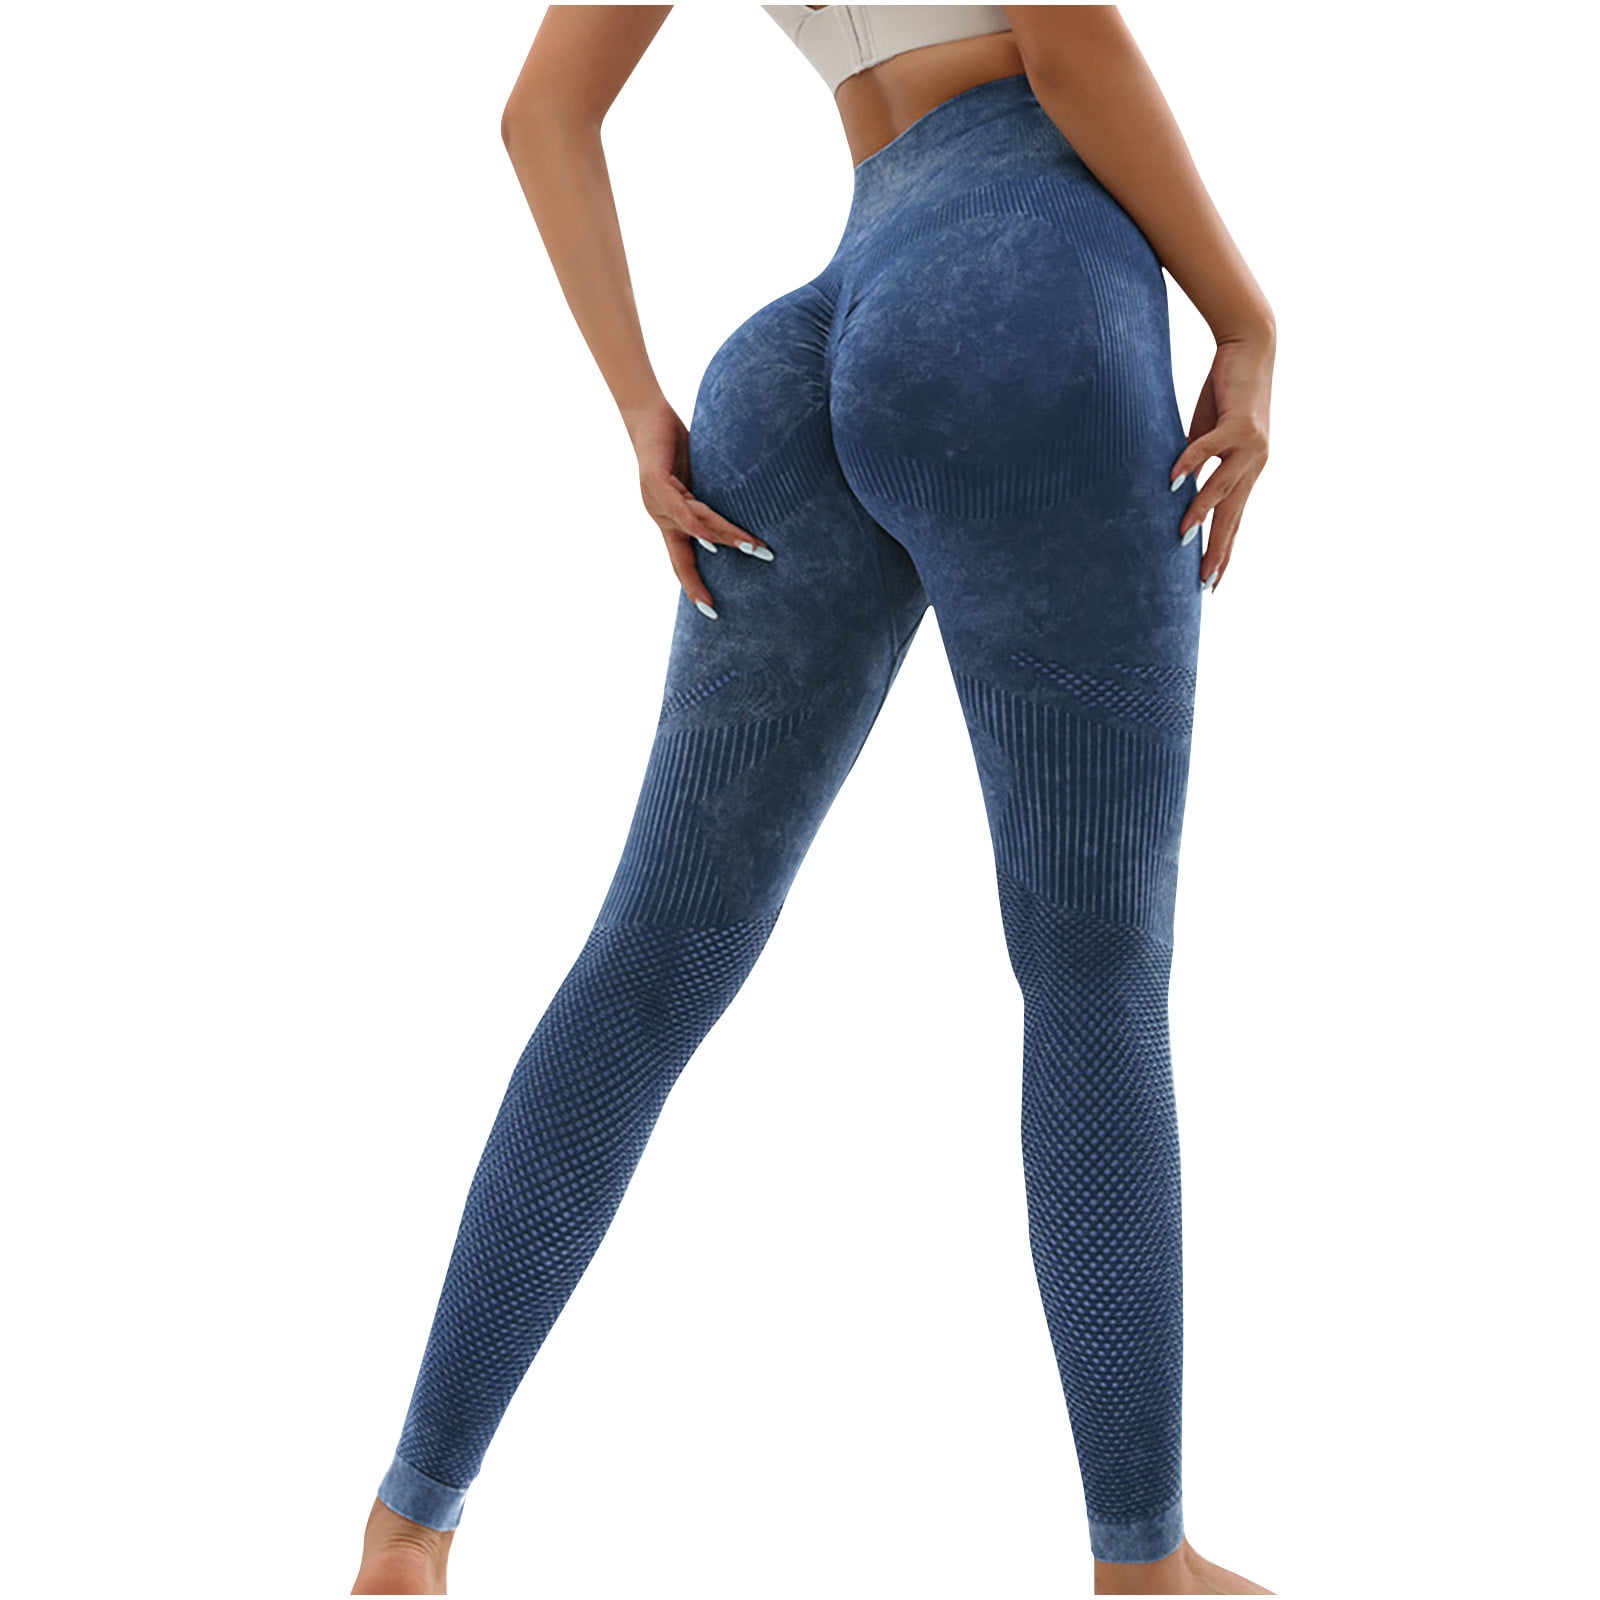 Ernkv Women's Athletic Leggings Yoga Pants Clearance Color Line